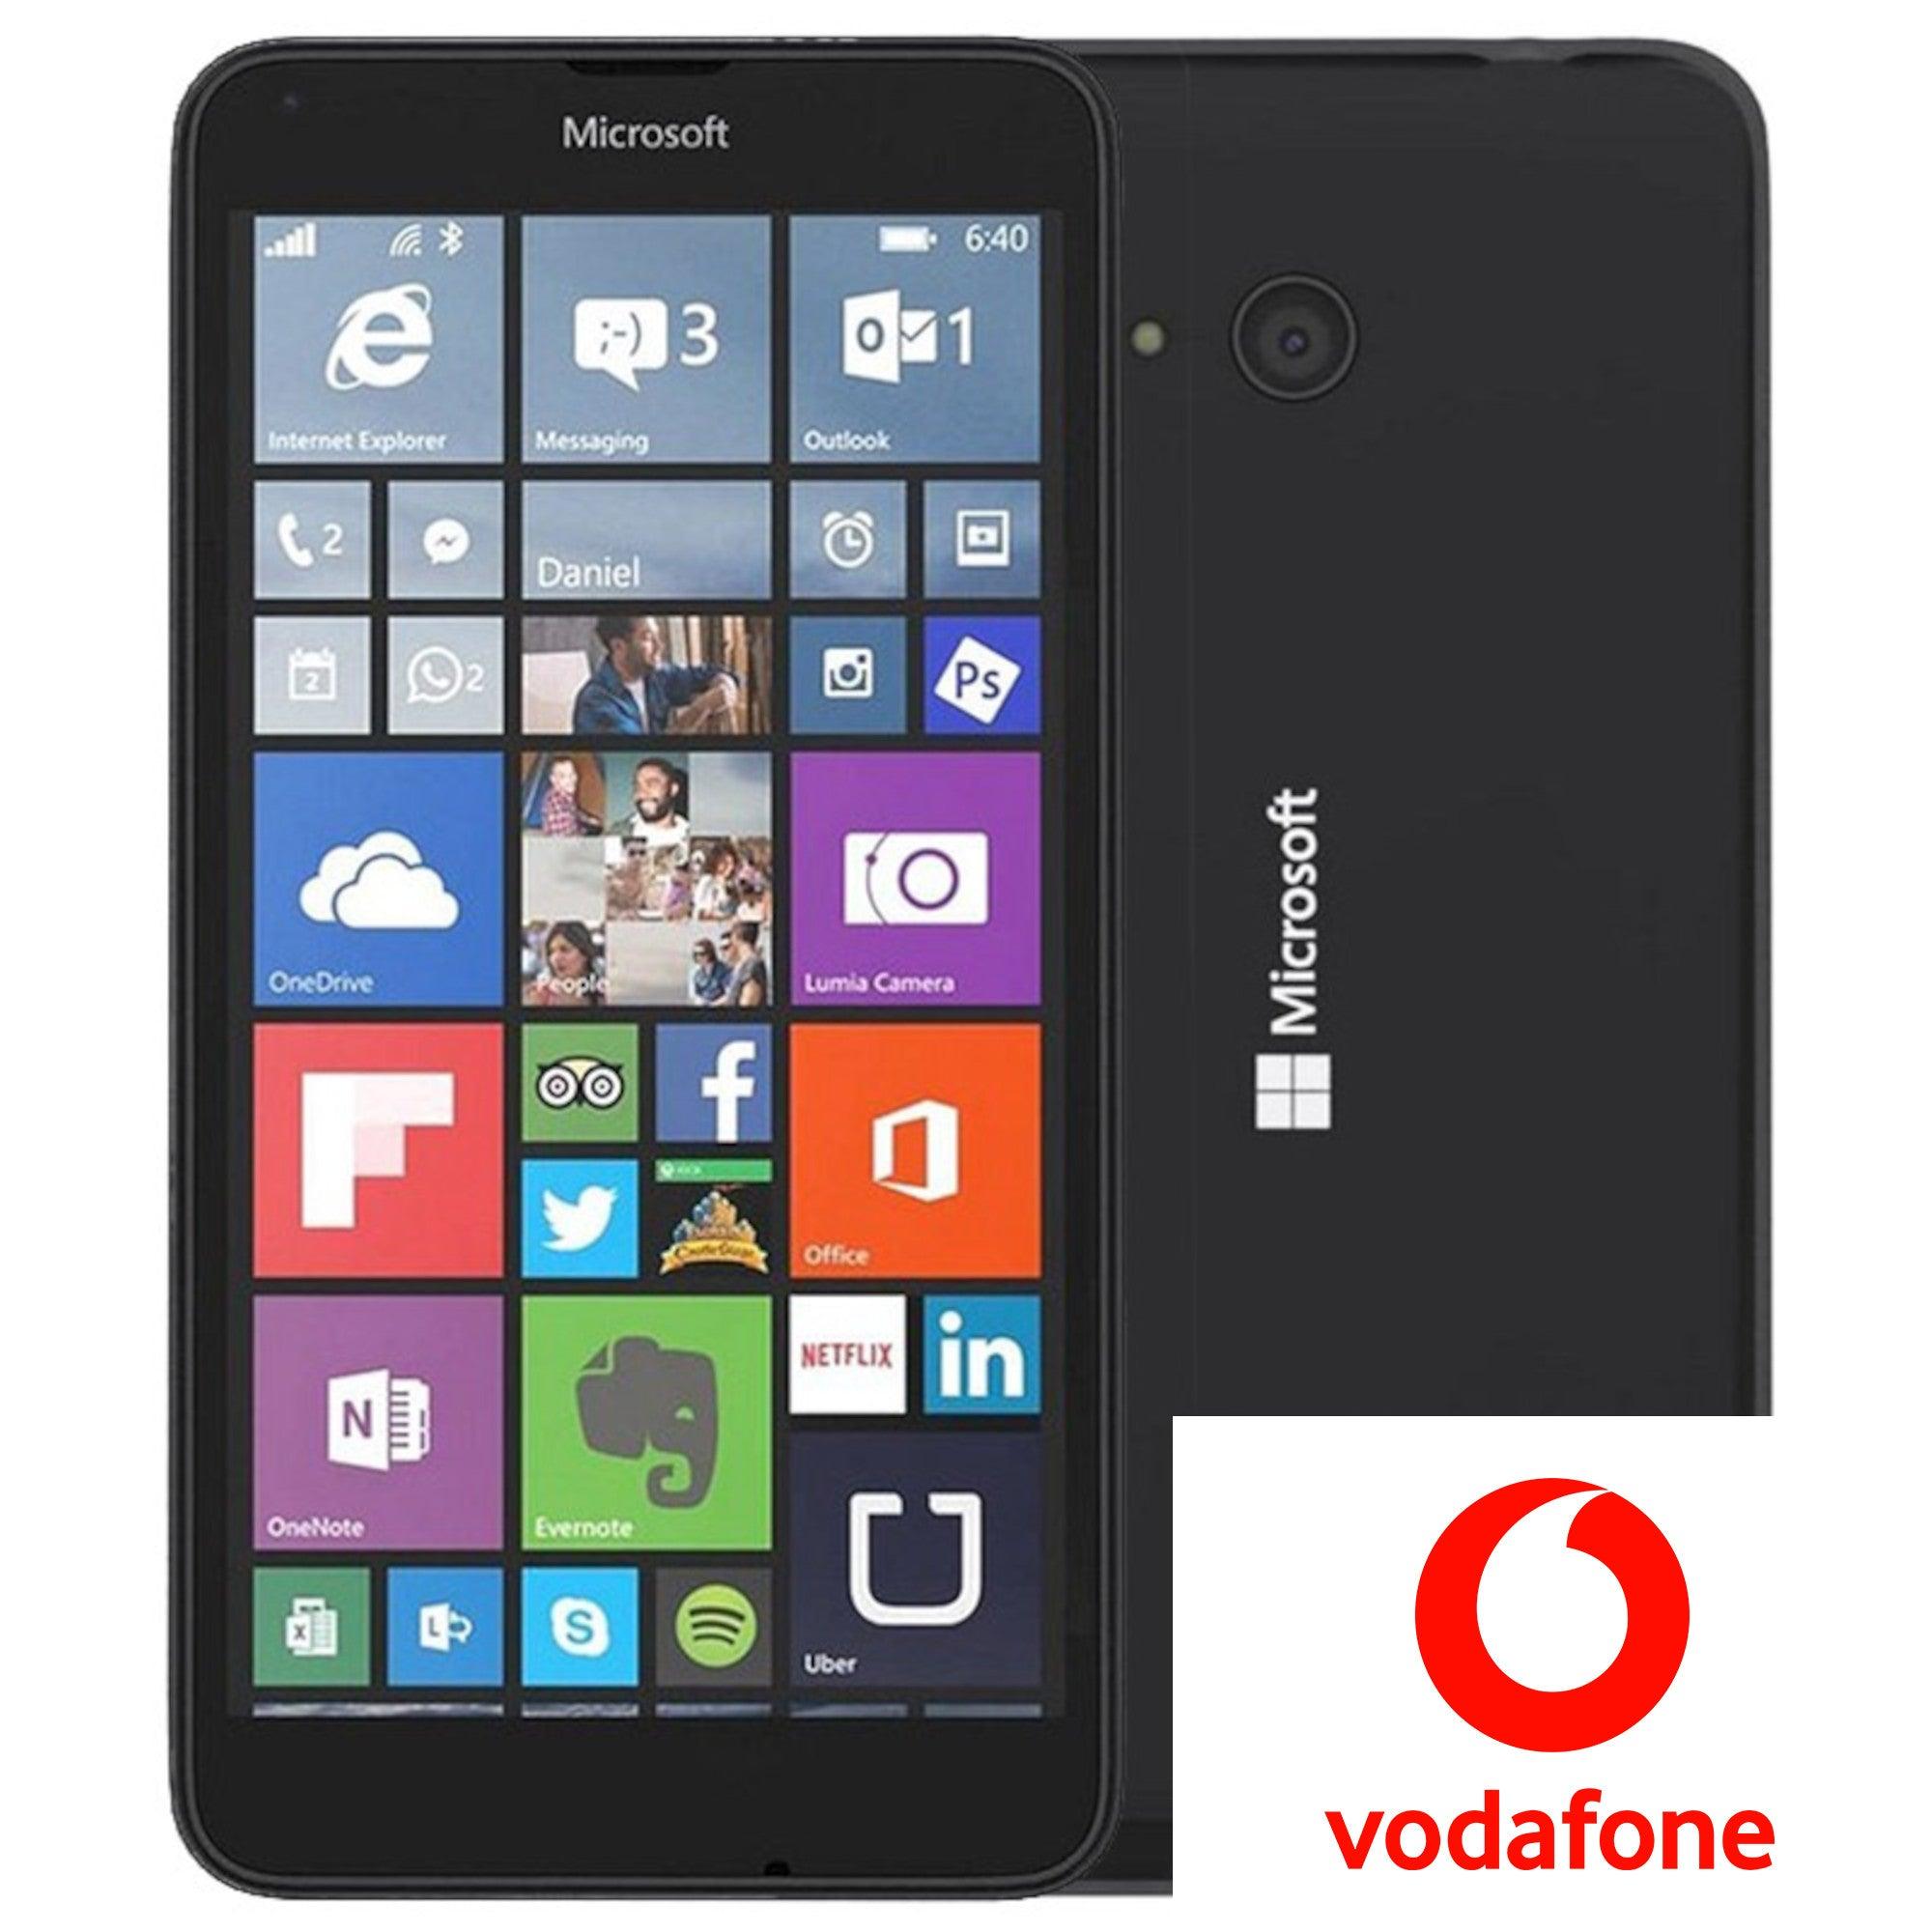 Microsoft Lumia 640 Black, 8GB, Vodafone Locked, Grade 2, Refurbished Phones